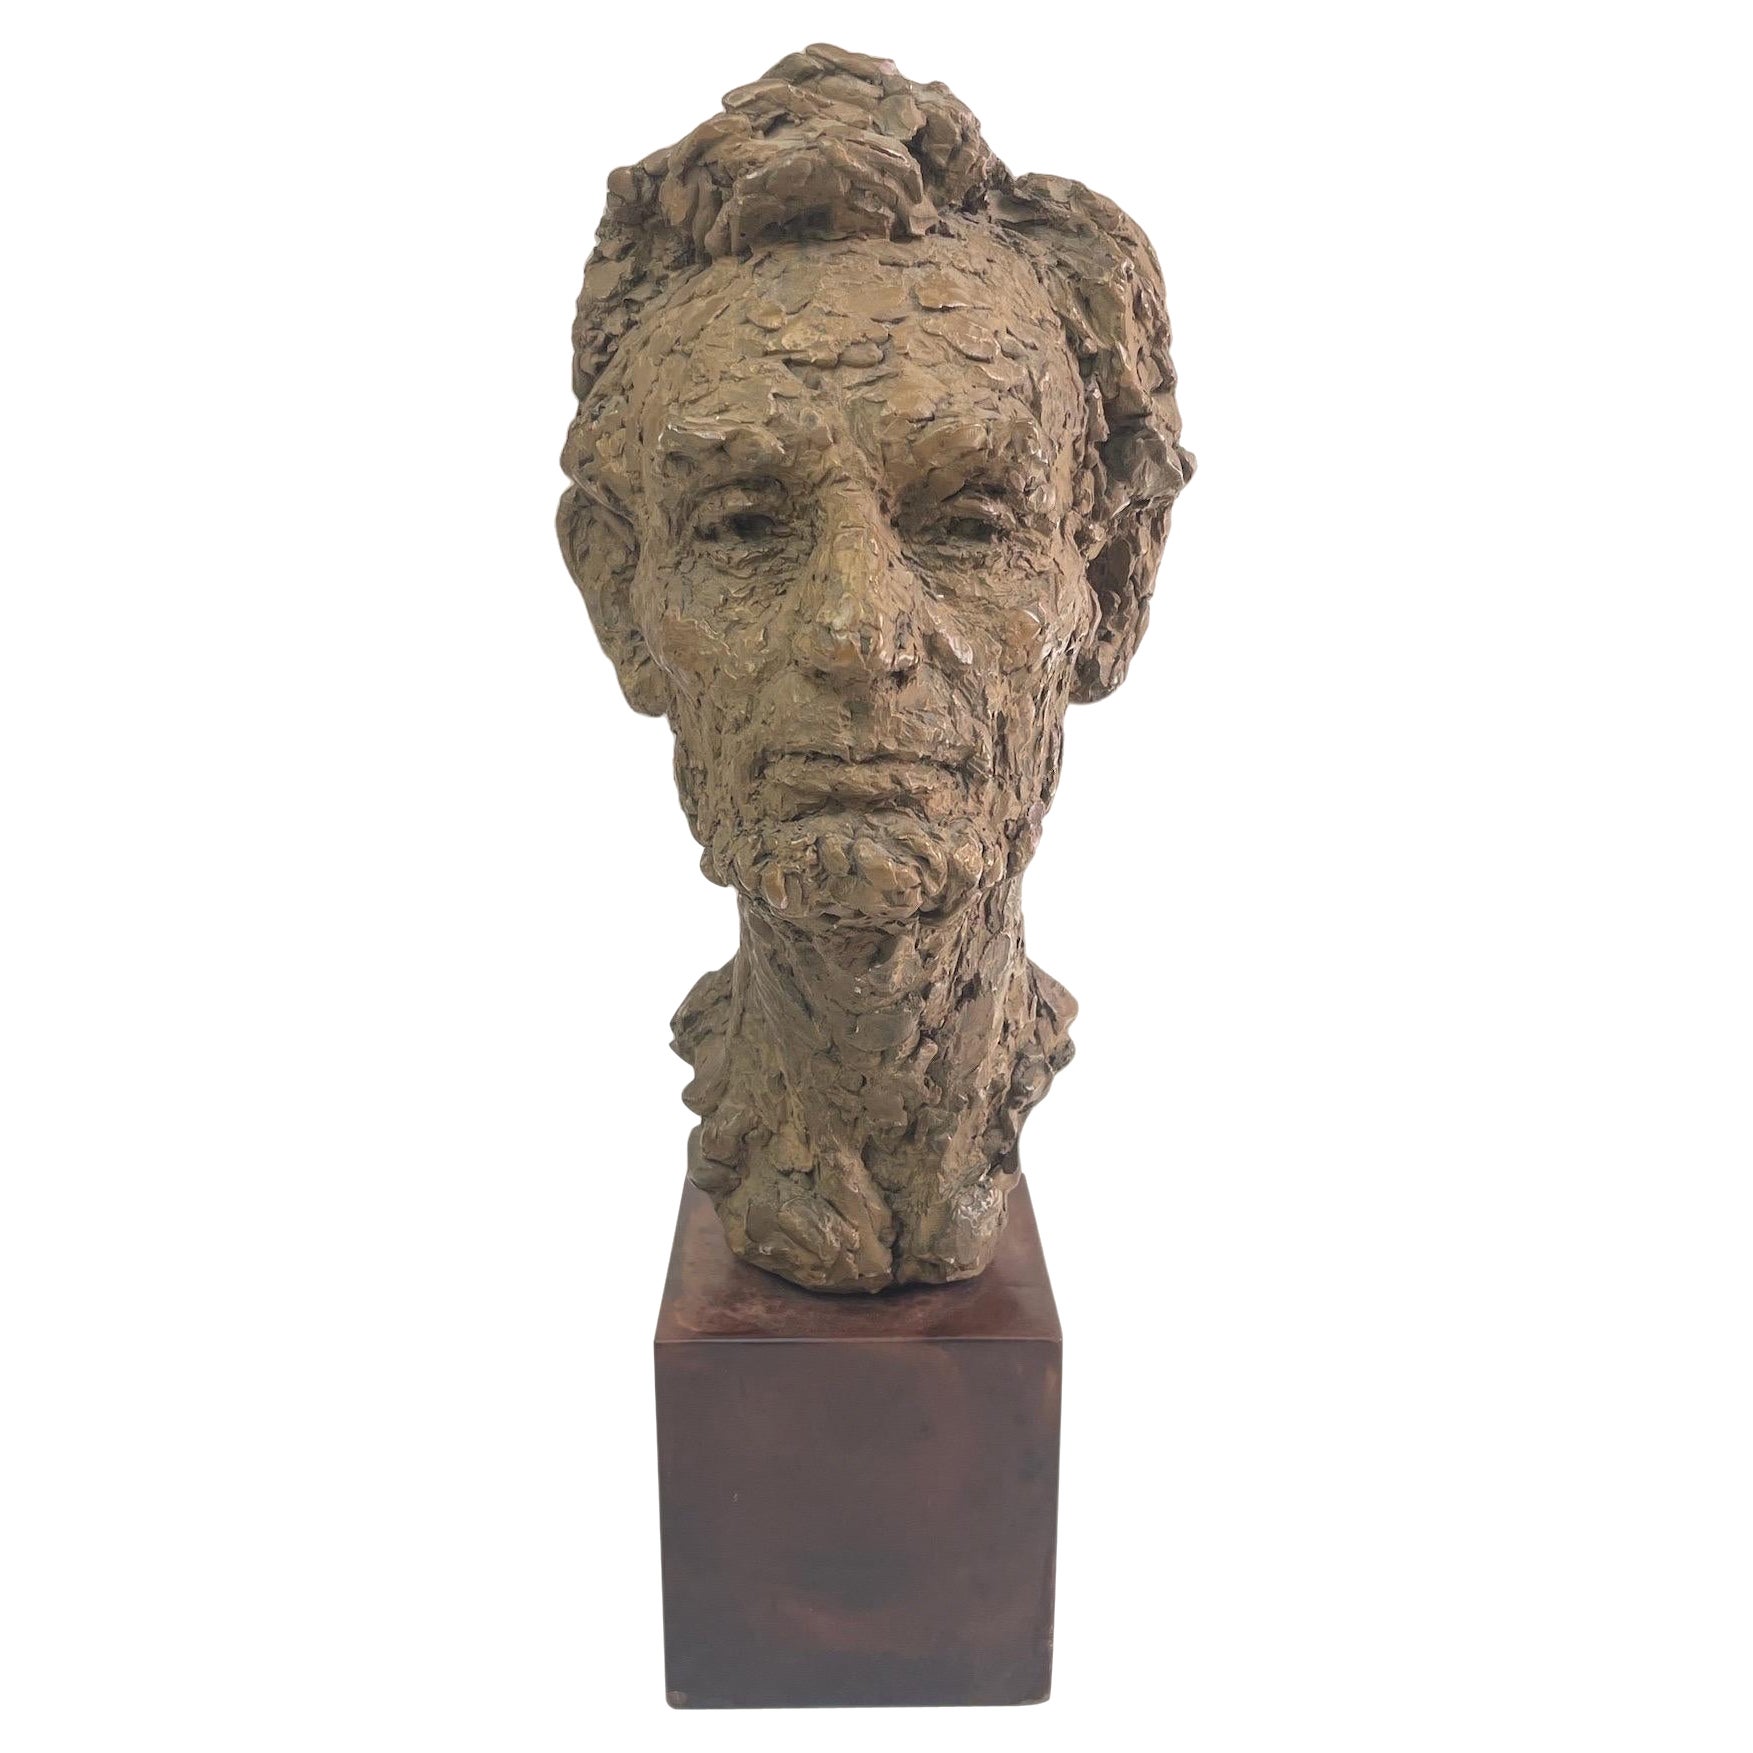 Unique Bust Sculpture of Abraham Lincoln For Sale